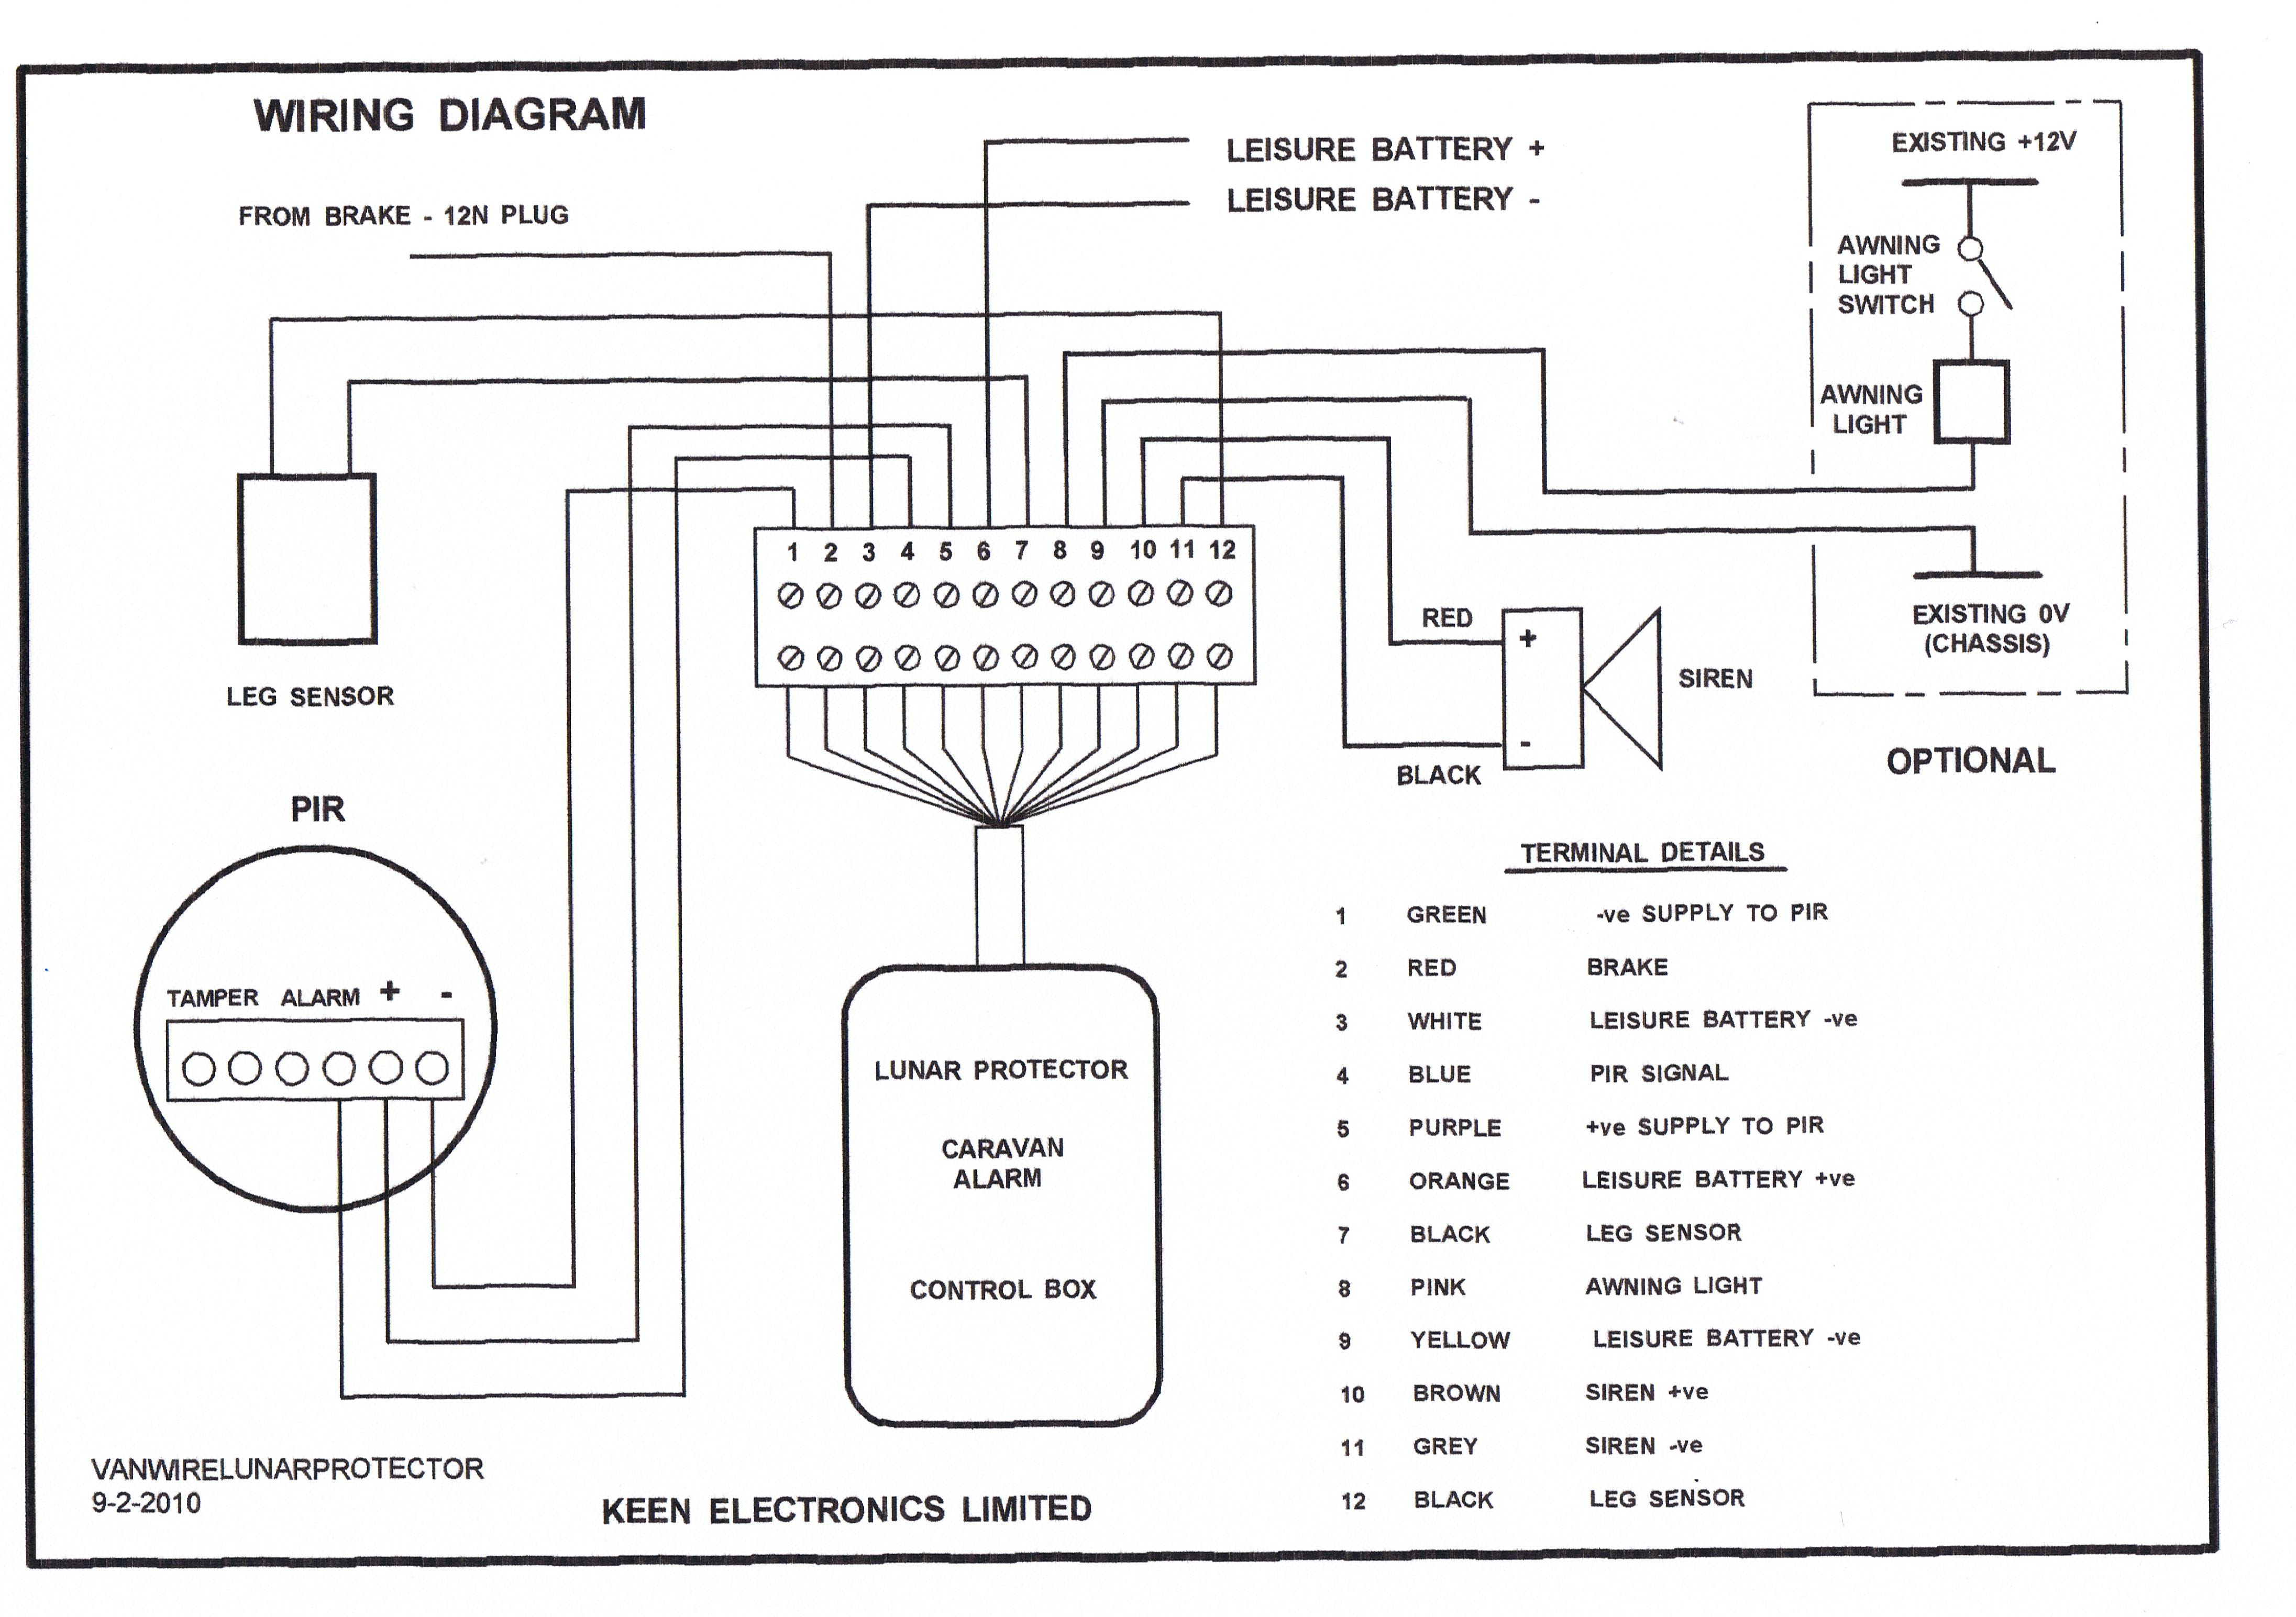 Wiring Diagram Alarm Mobil Home Wiring Diagram